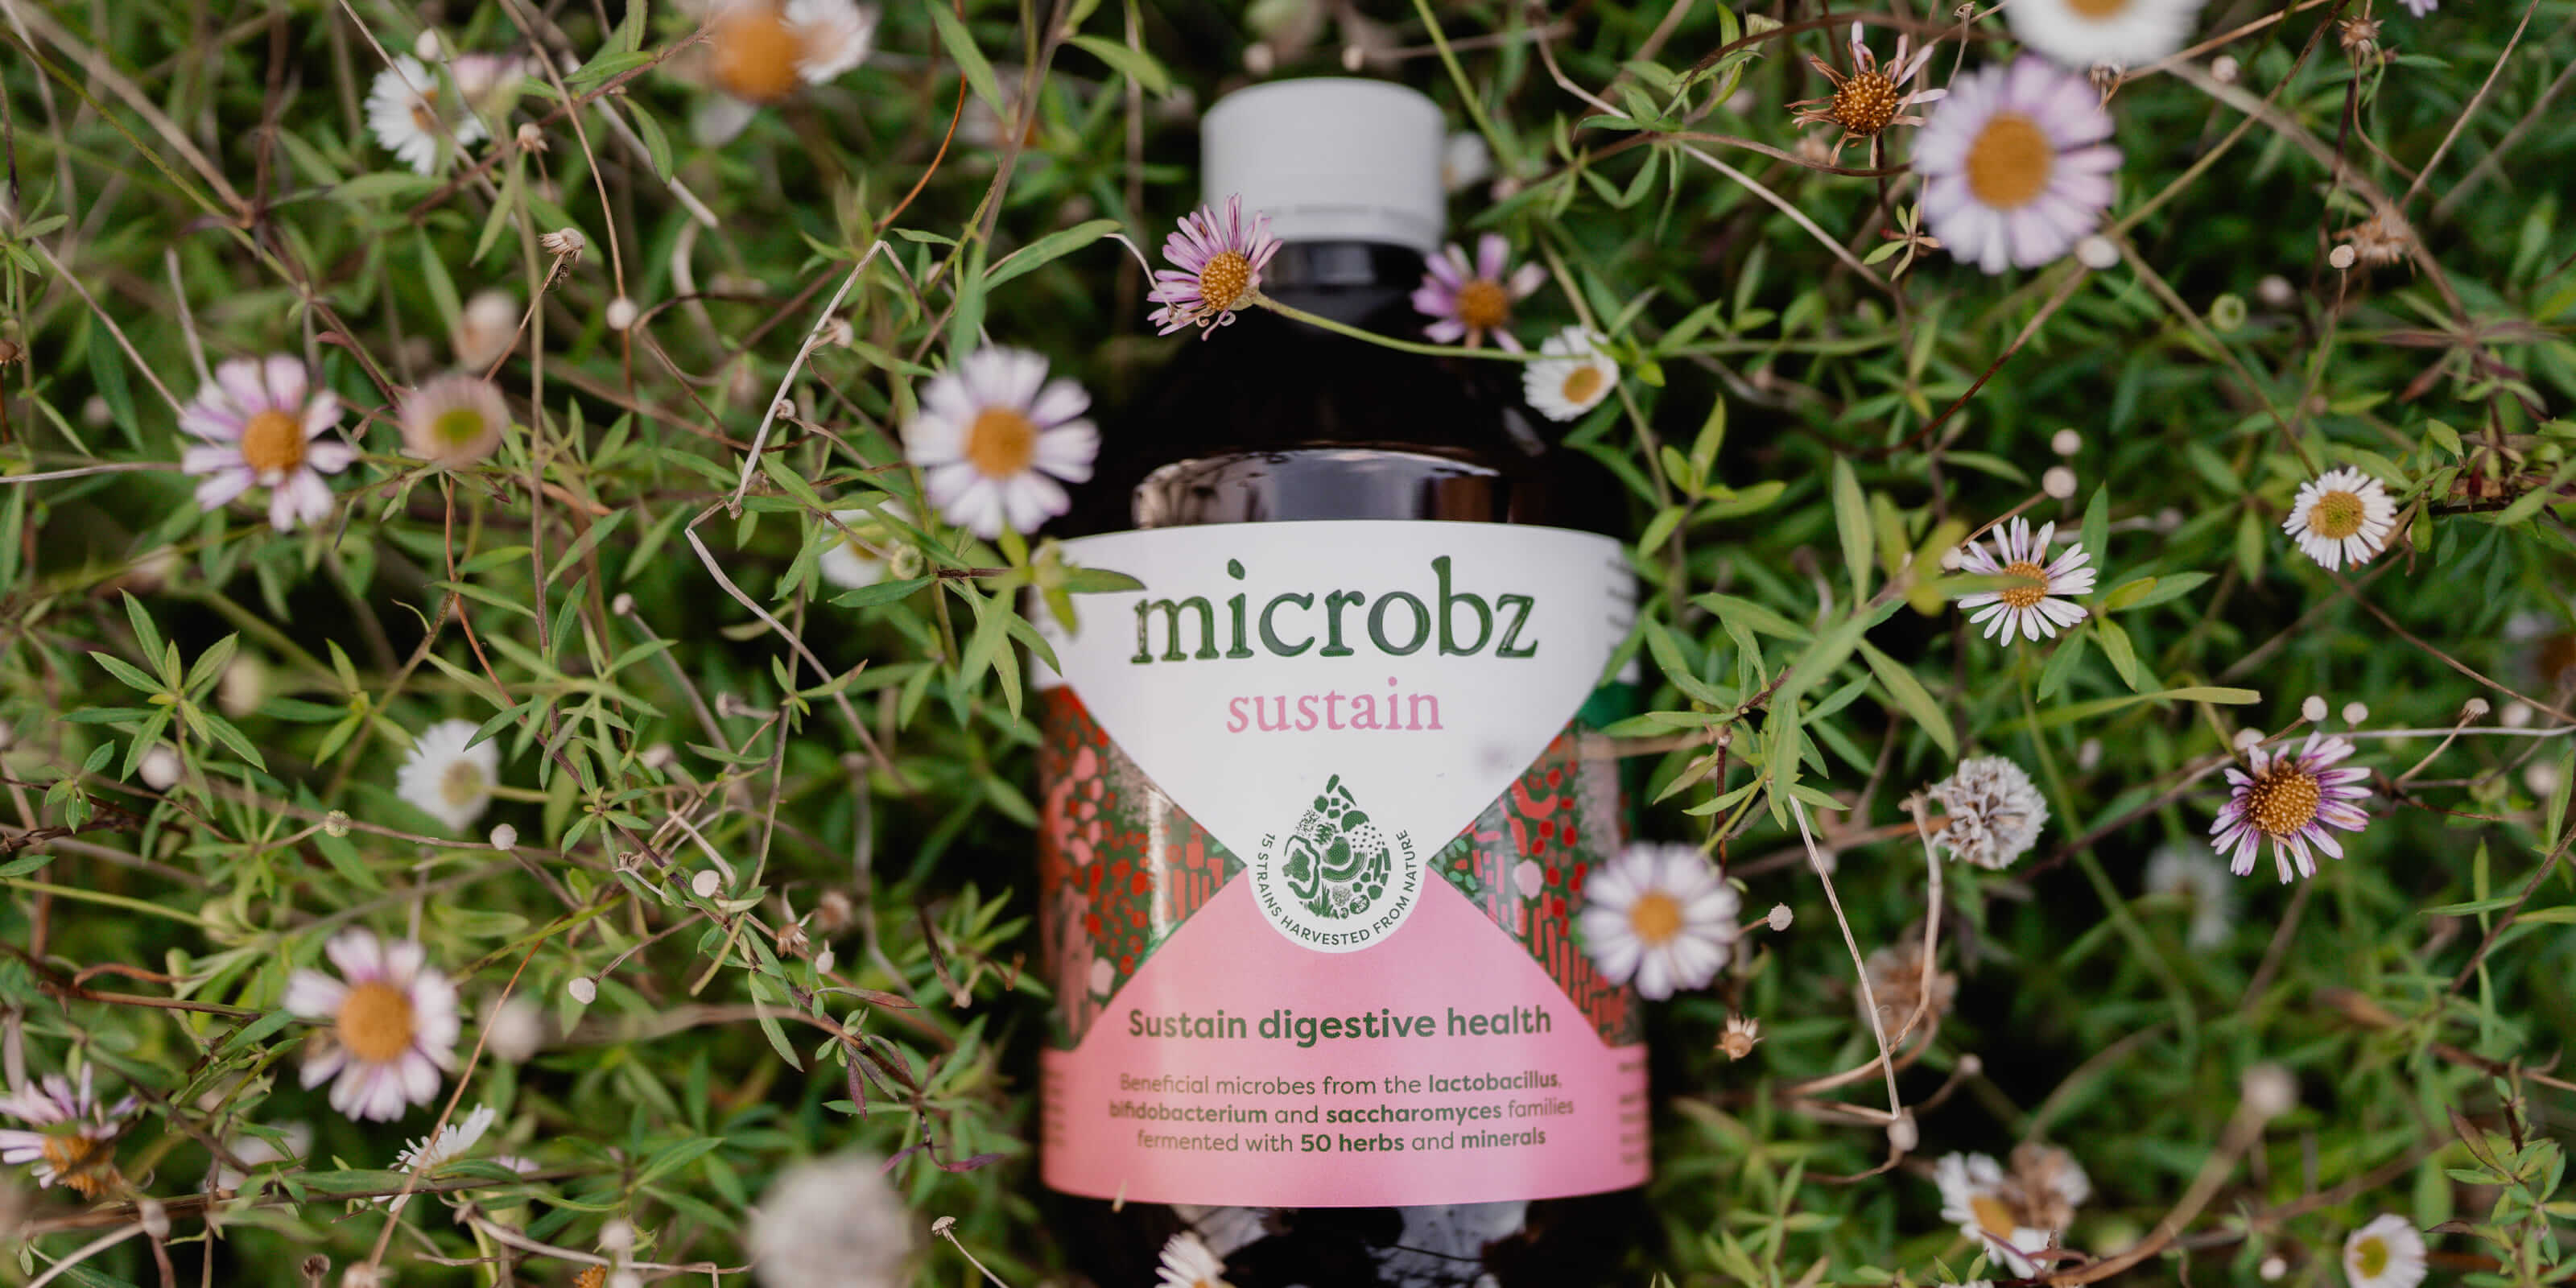 bottle of microbz sustain in flowers